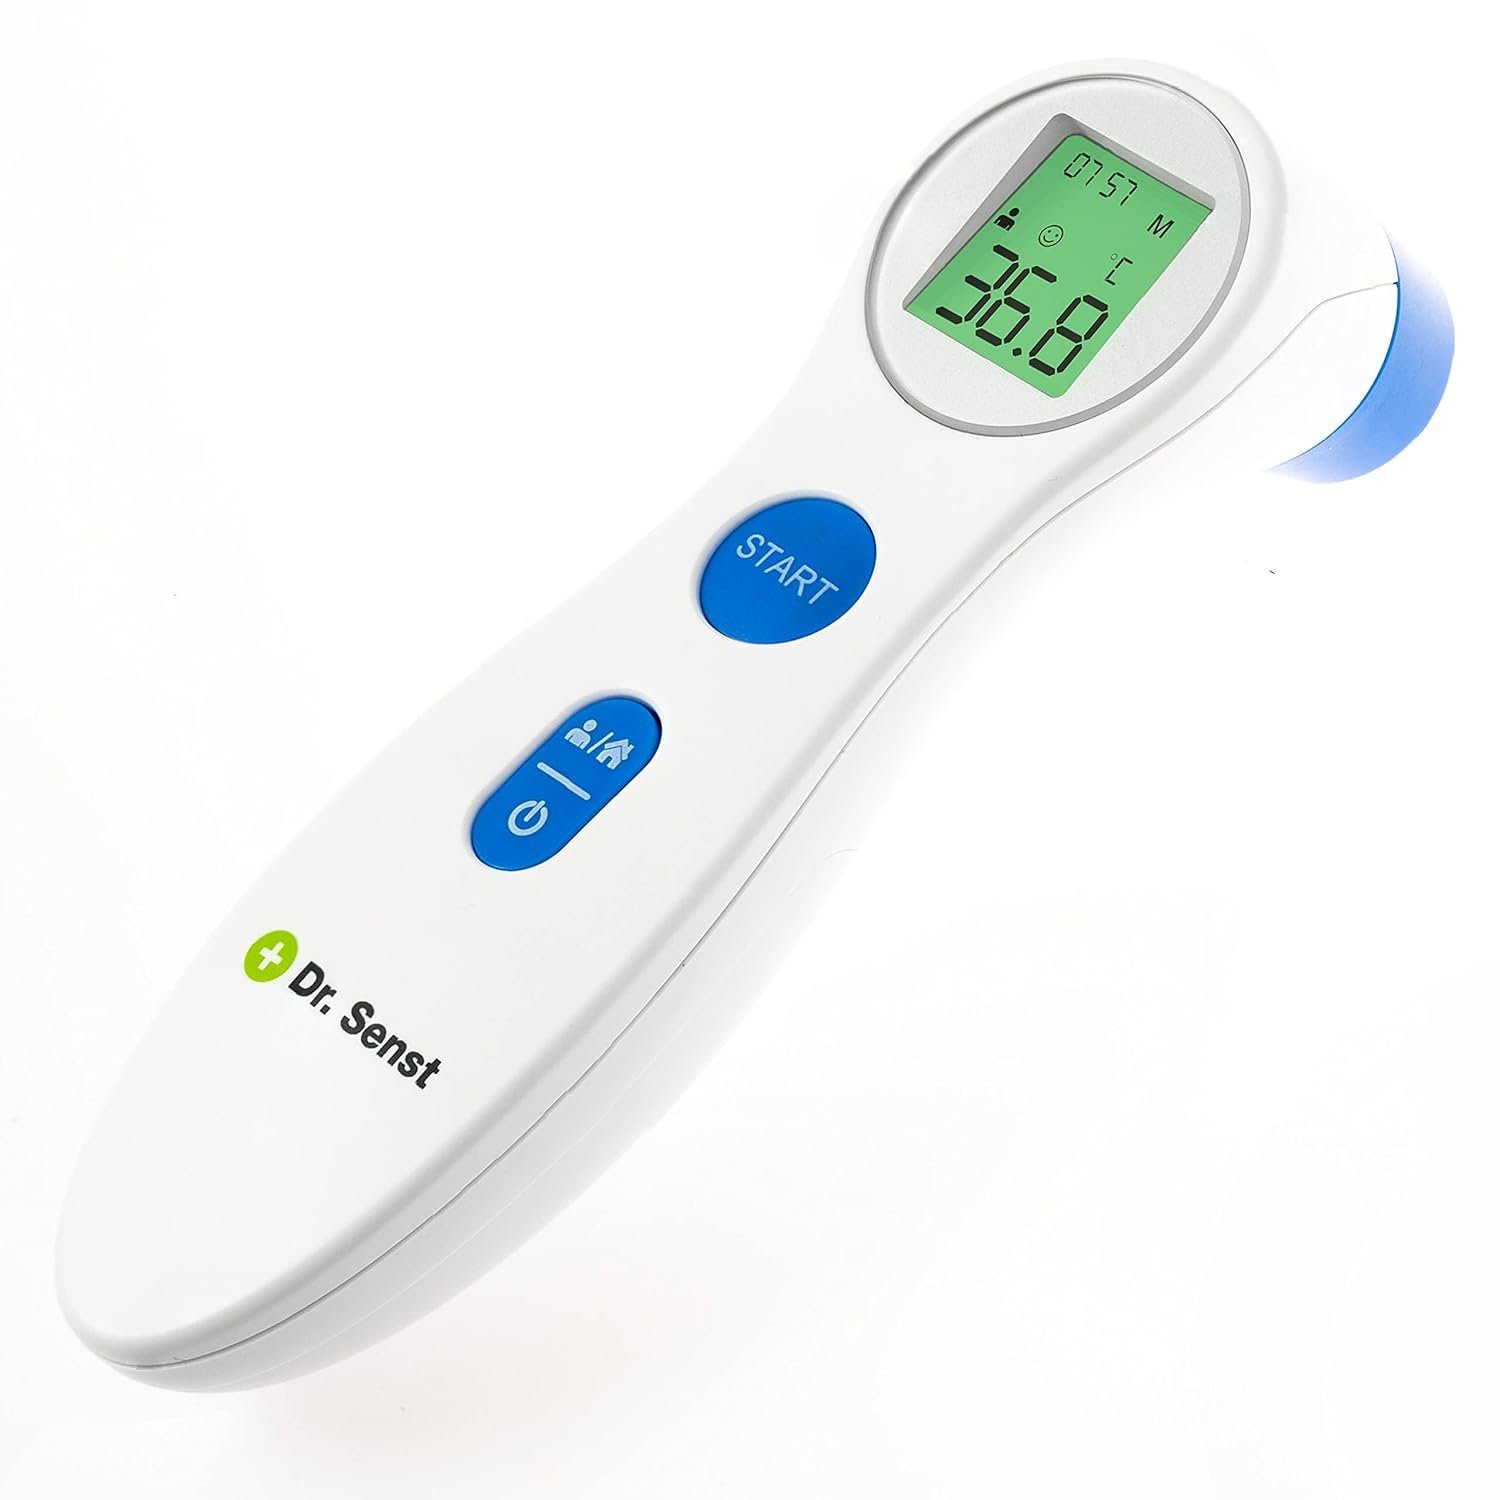 Dr. Senst Infrarot-Fieberthermometer Dr. Senst Stirn-Thermometer, 2in1, mit Infrarot-Sensor DET-306